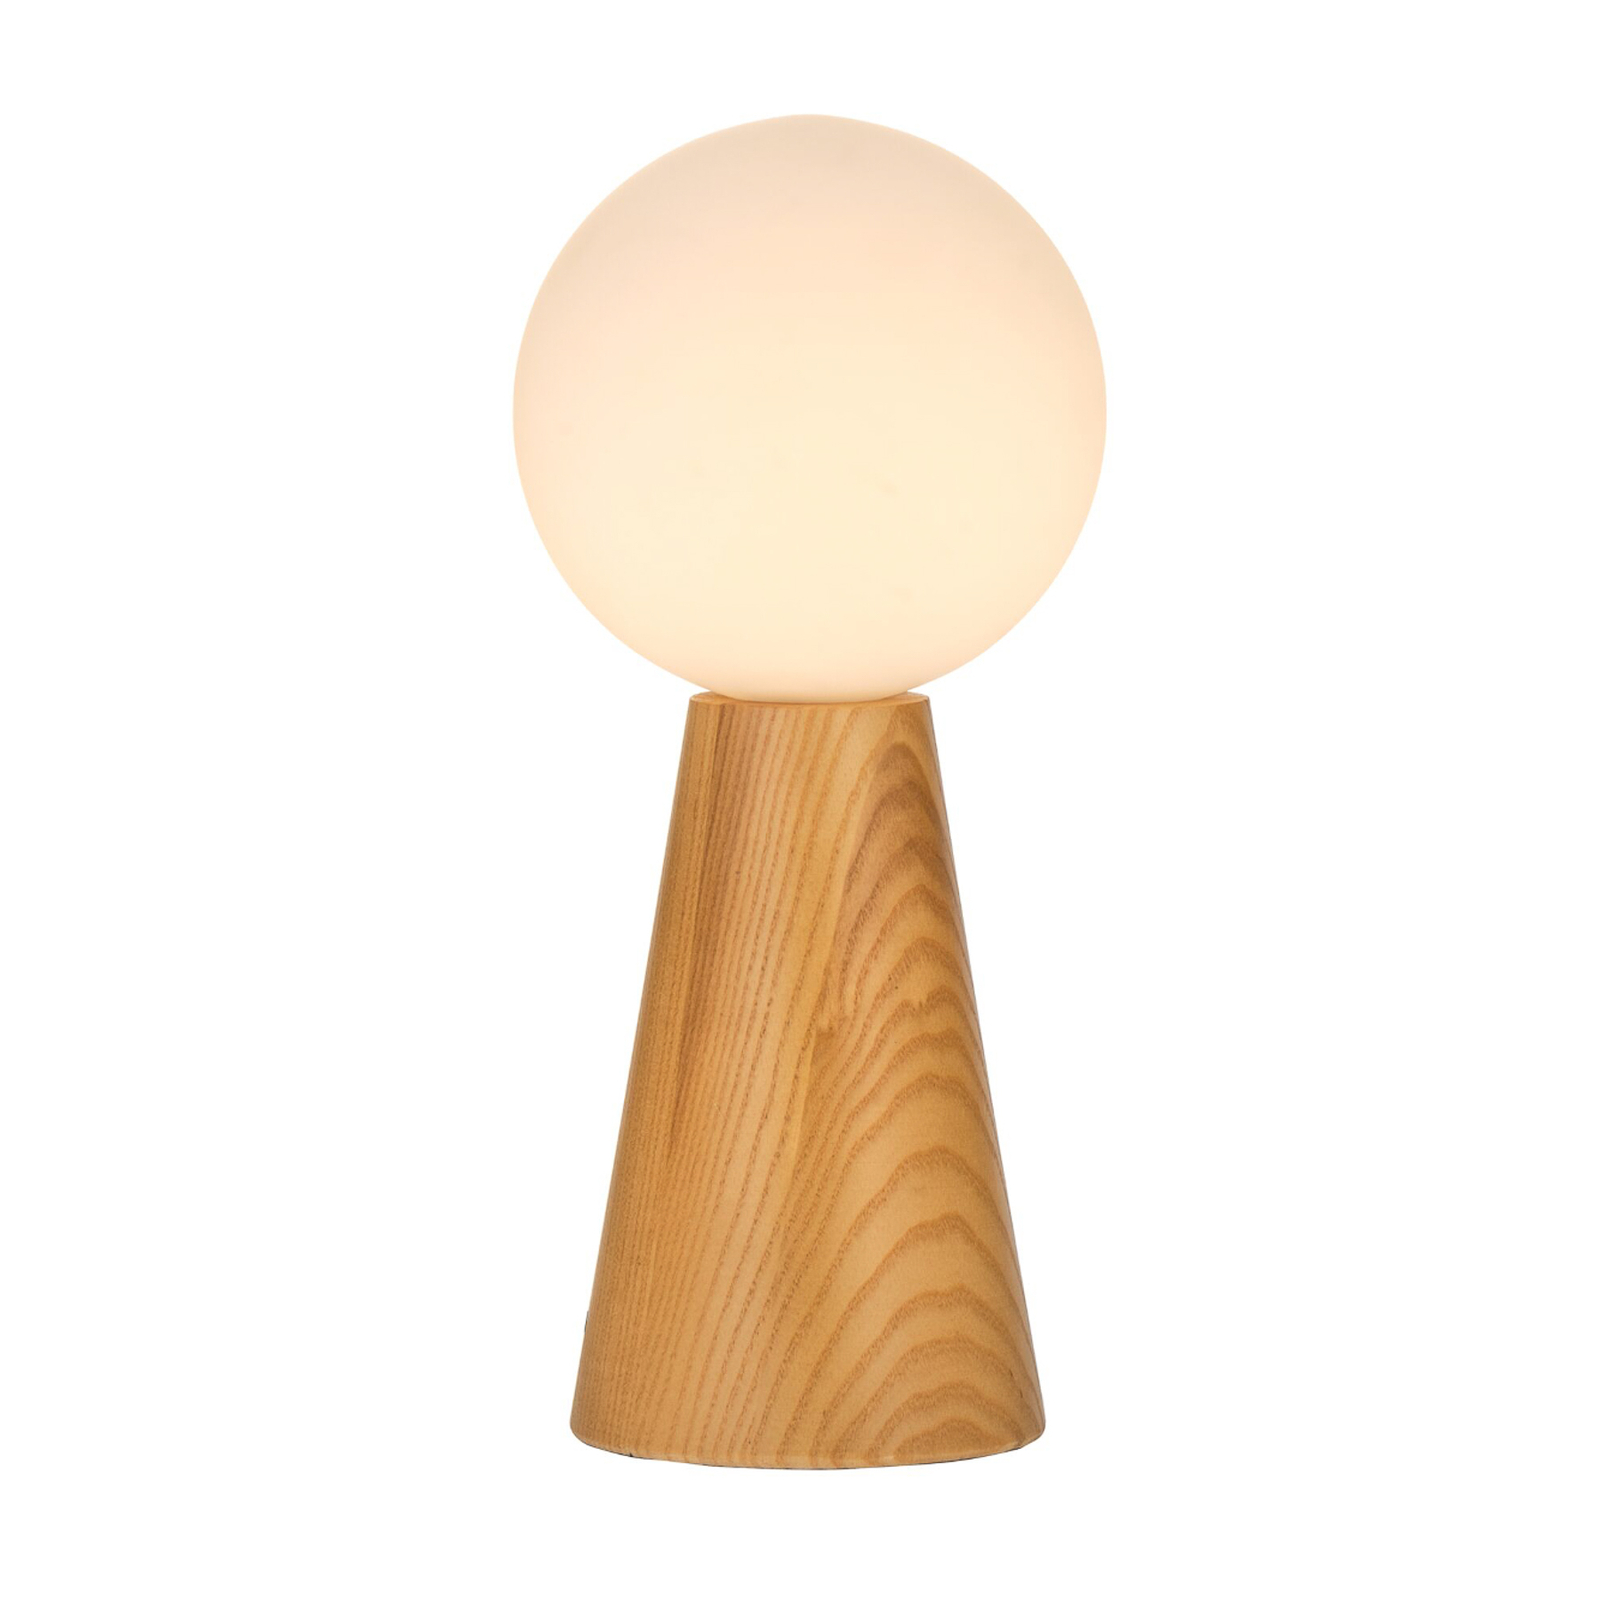 Pauleen Woody Soul lampe de table, bois/verre